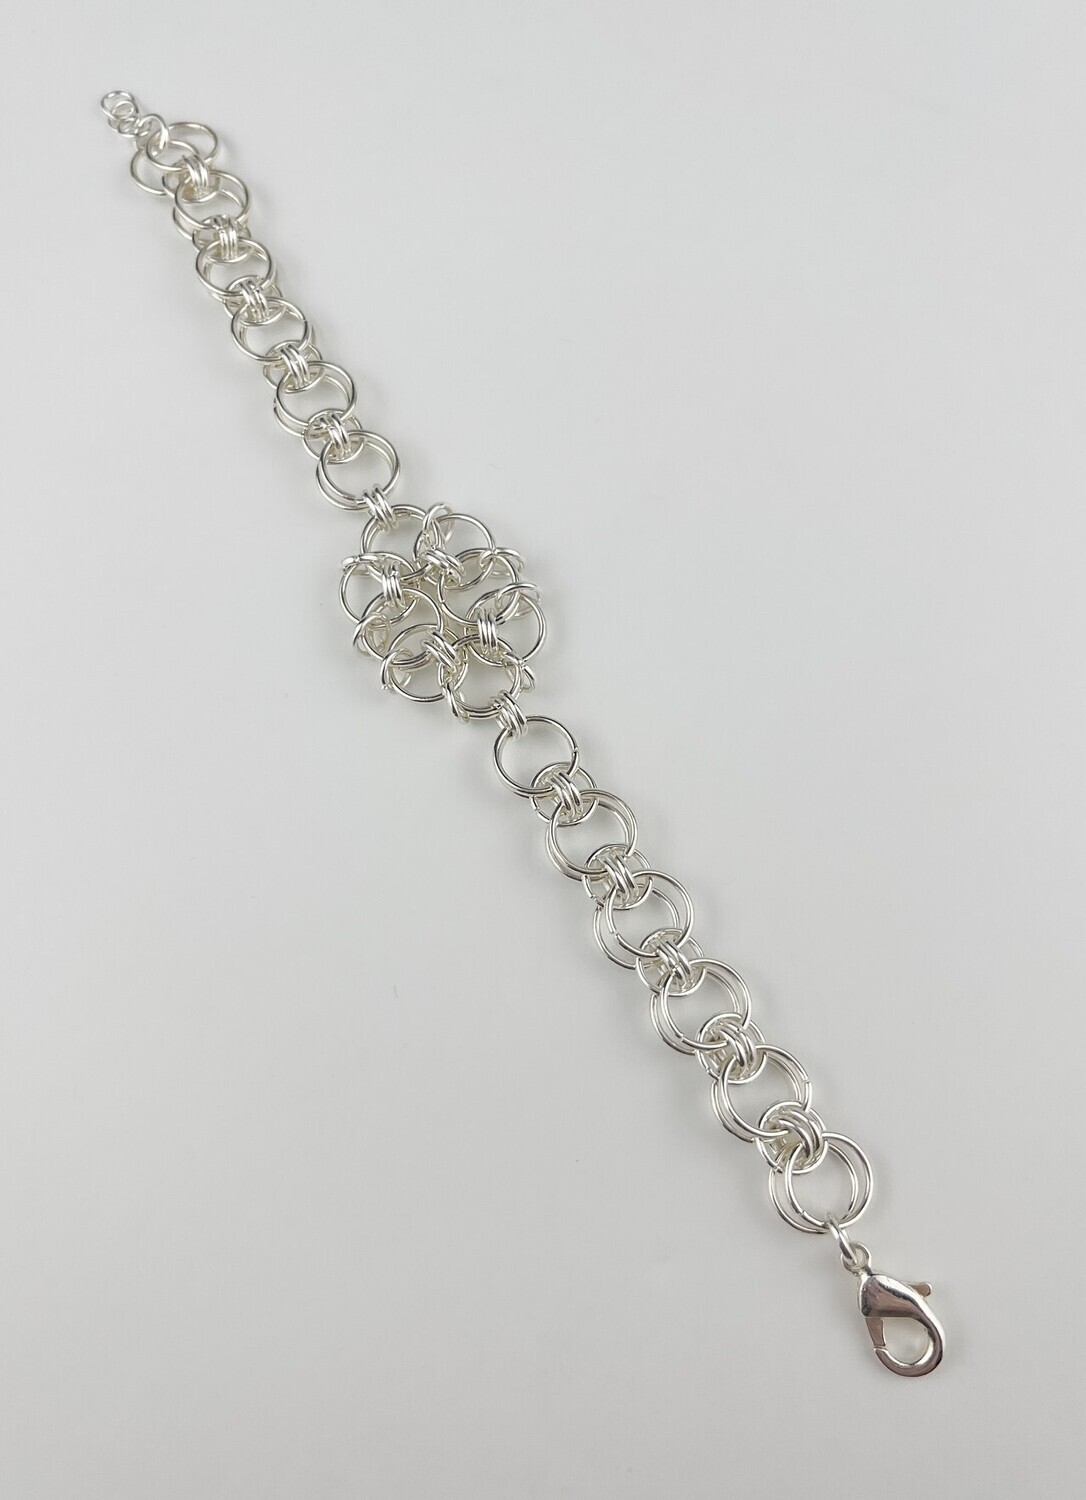 Sterling Silver "Flower" Bracelet Size 7.5"